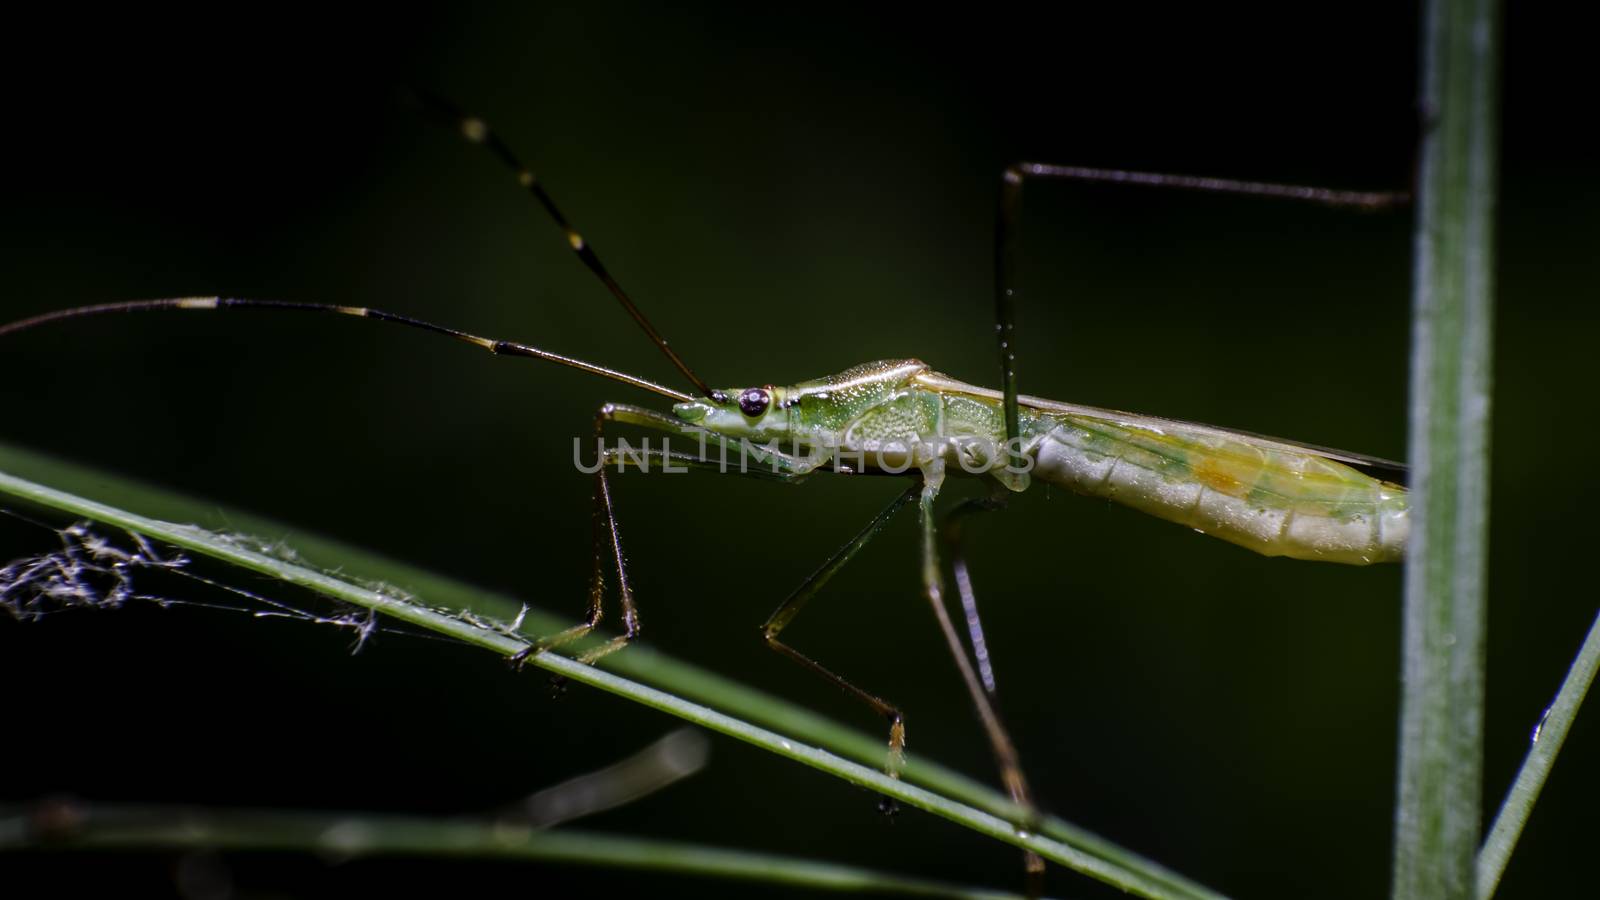 Grasshopper on grass branch, Macro shot